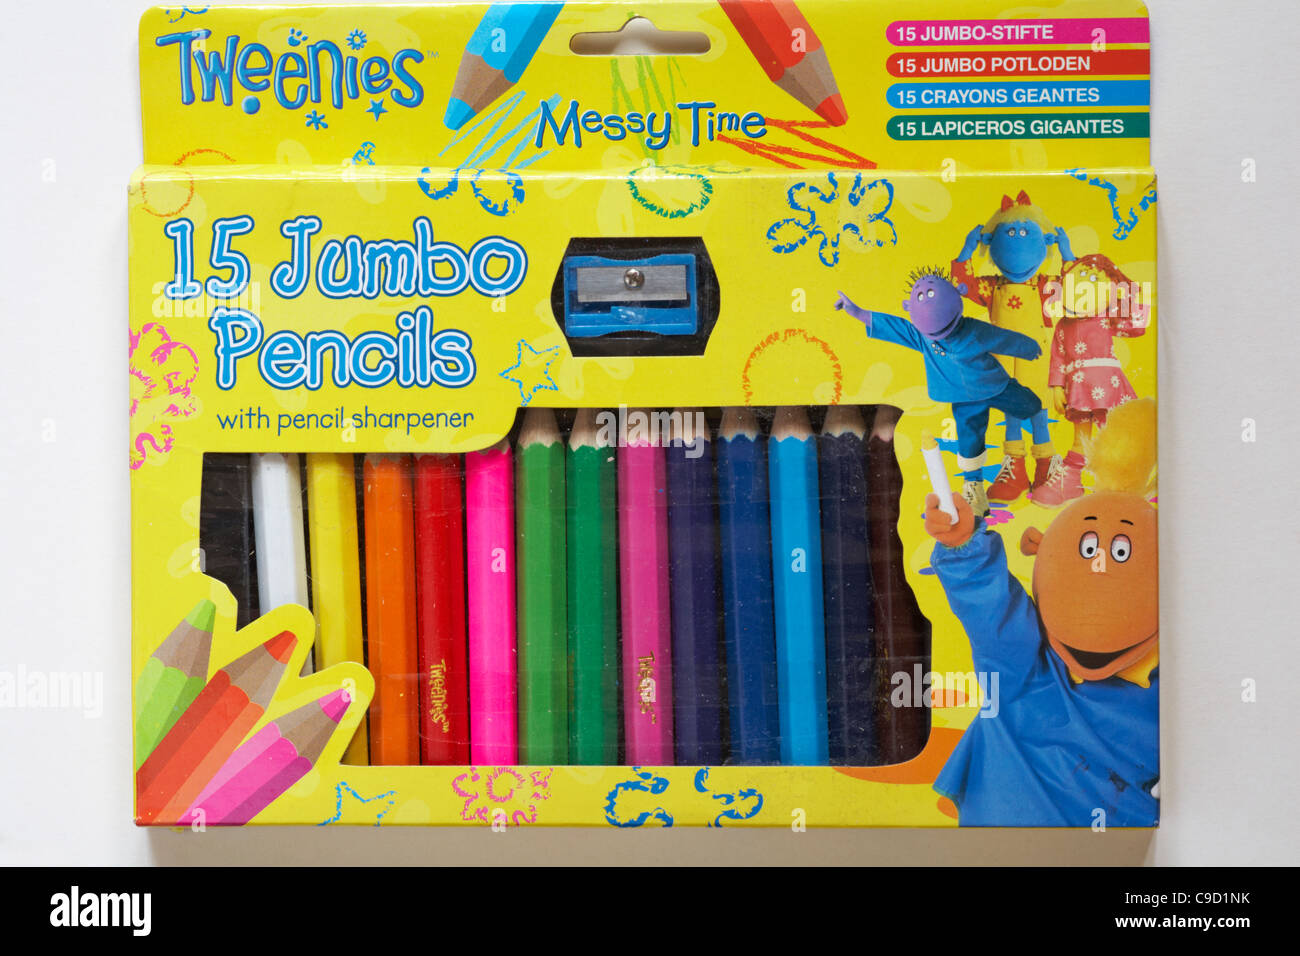 Box of Tweenies 15 Jumbo Pencils with pencil sharpener isolated on white background Stock Photo